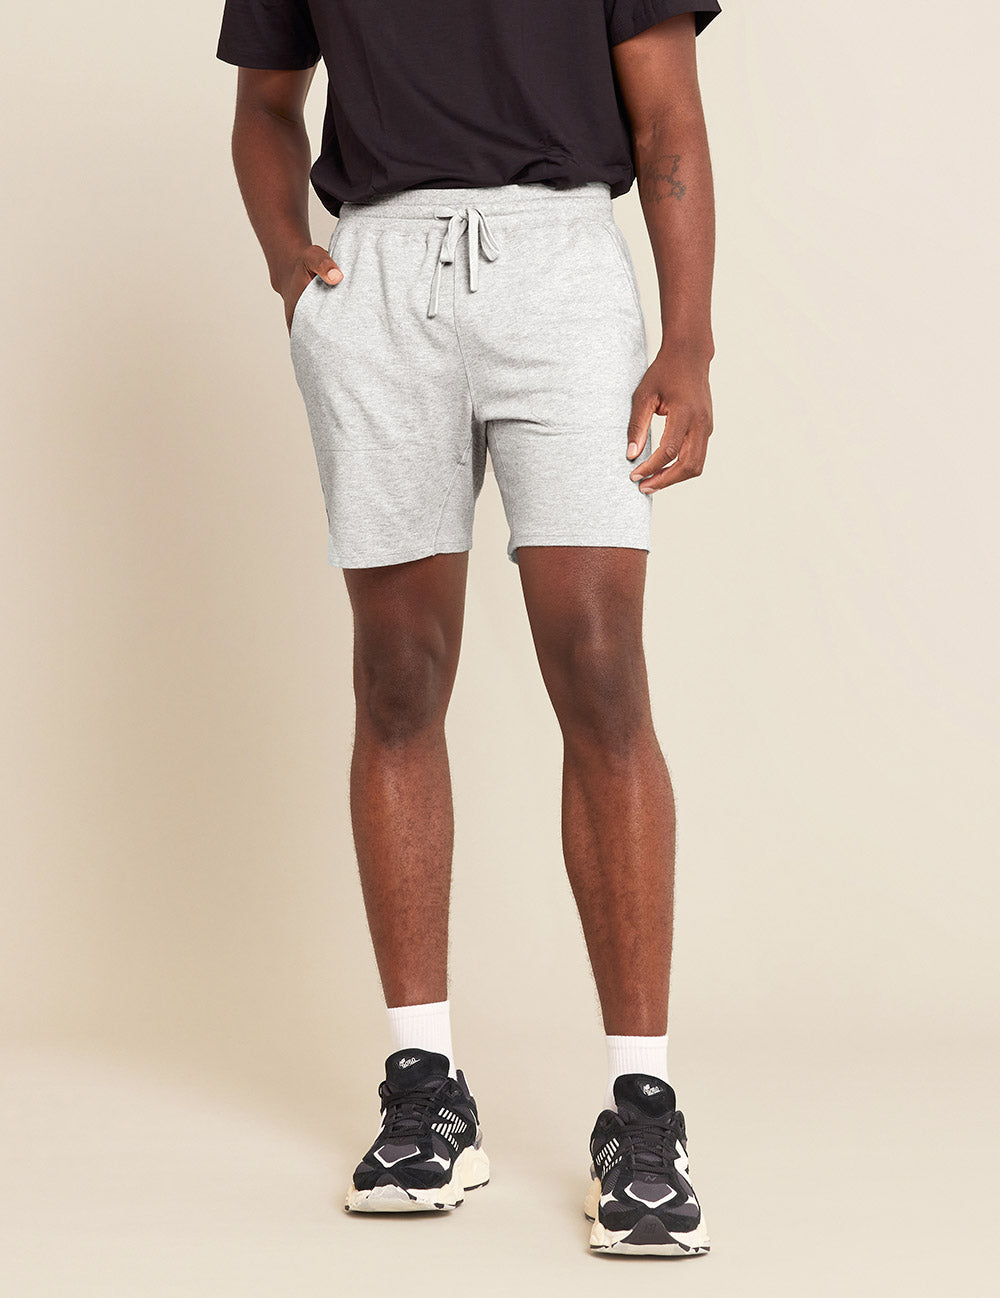 Boody Men's Weekend Sweat Shorts in Light Grey Marl Front